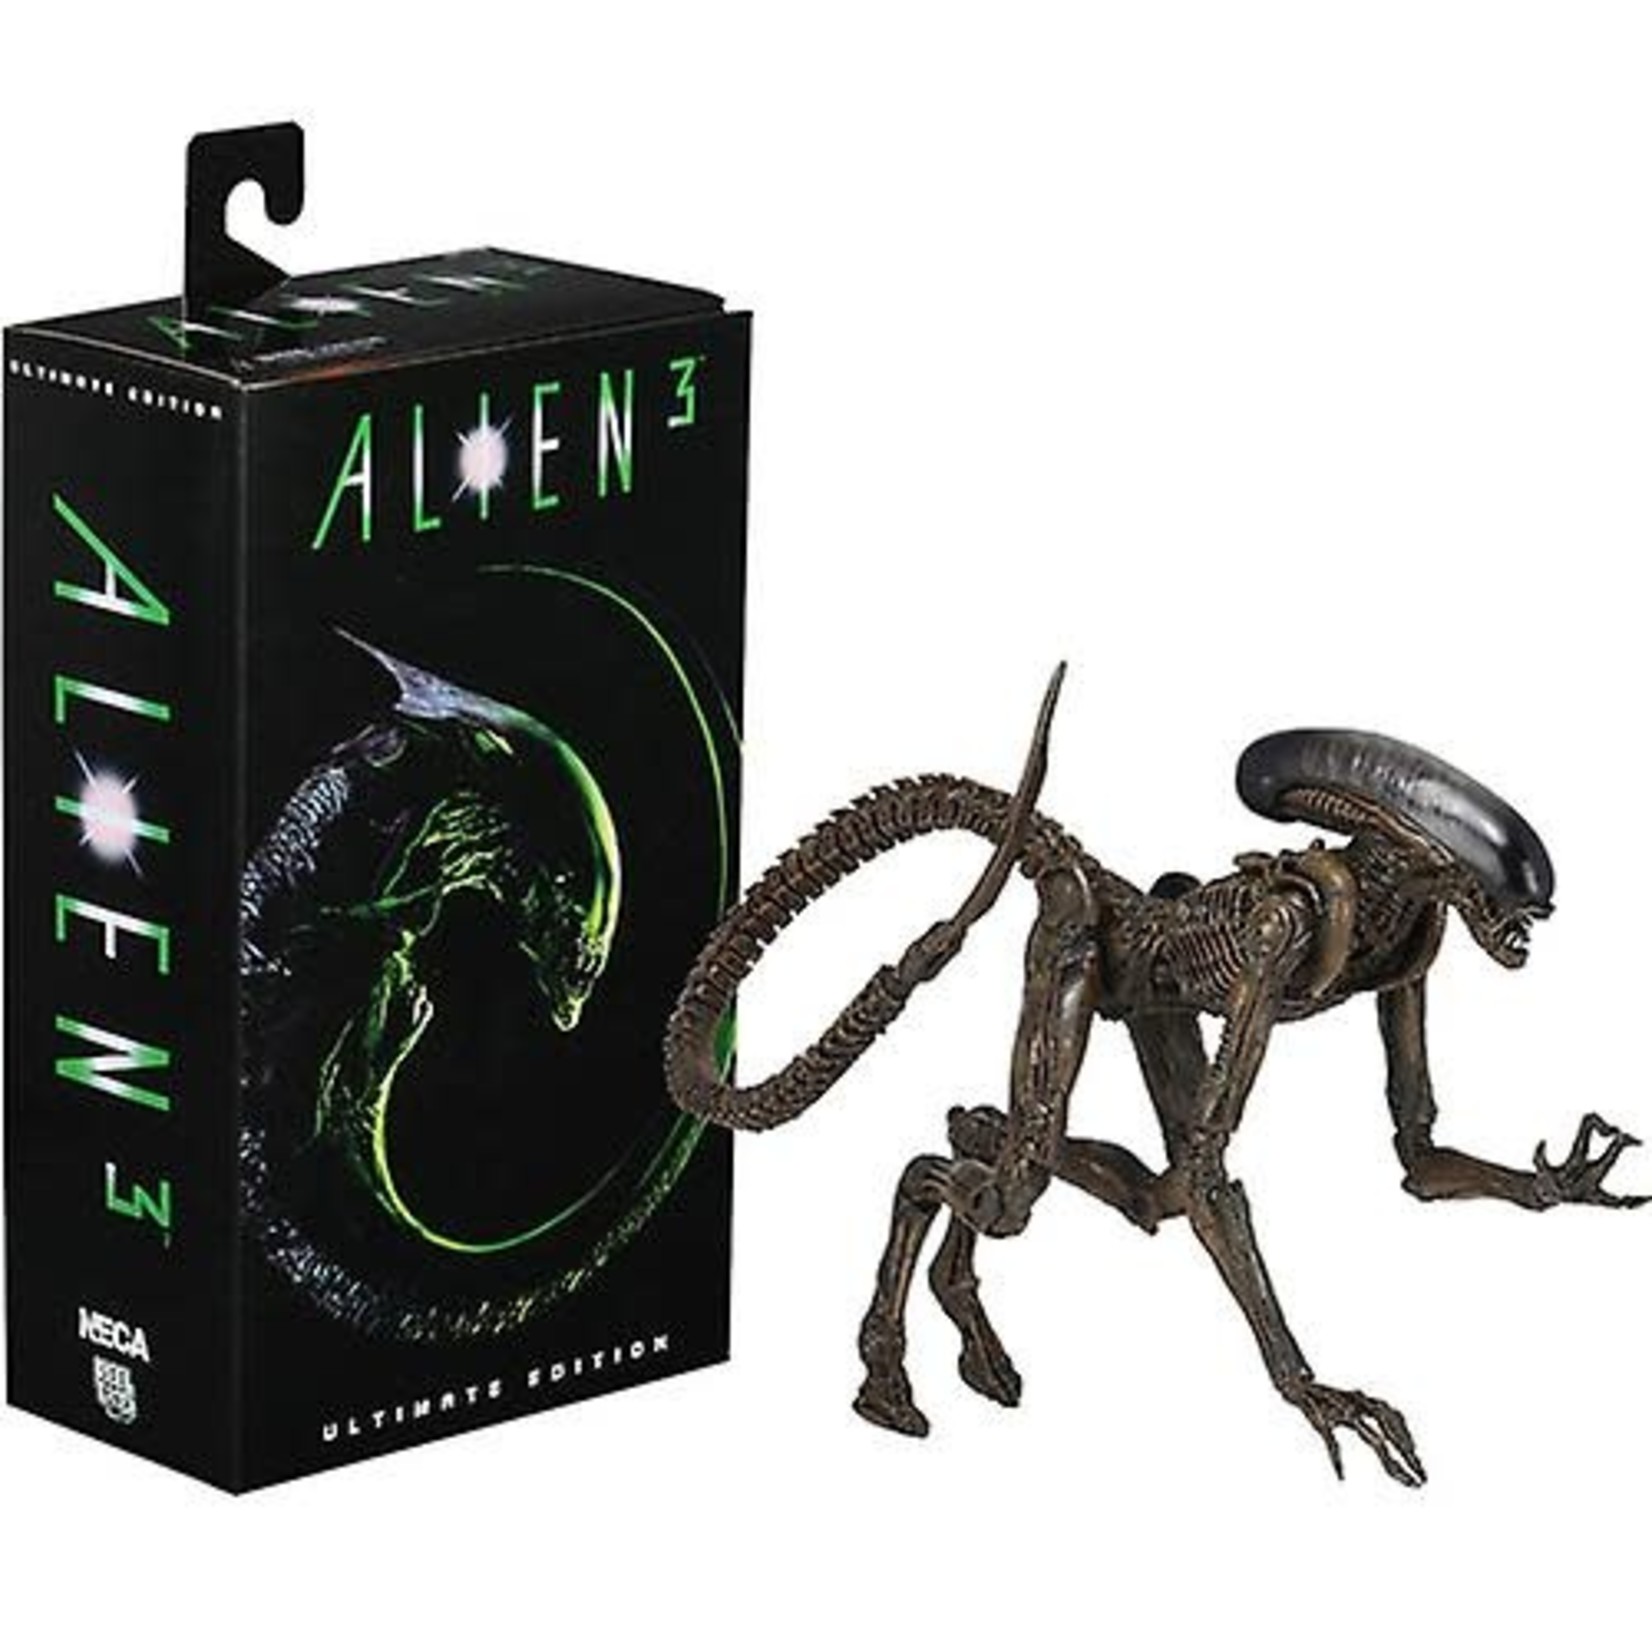 Neca Alien 3 Ultimate Edition